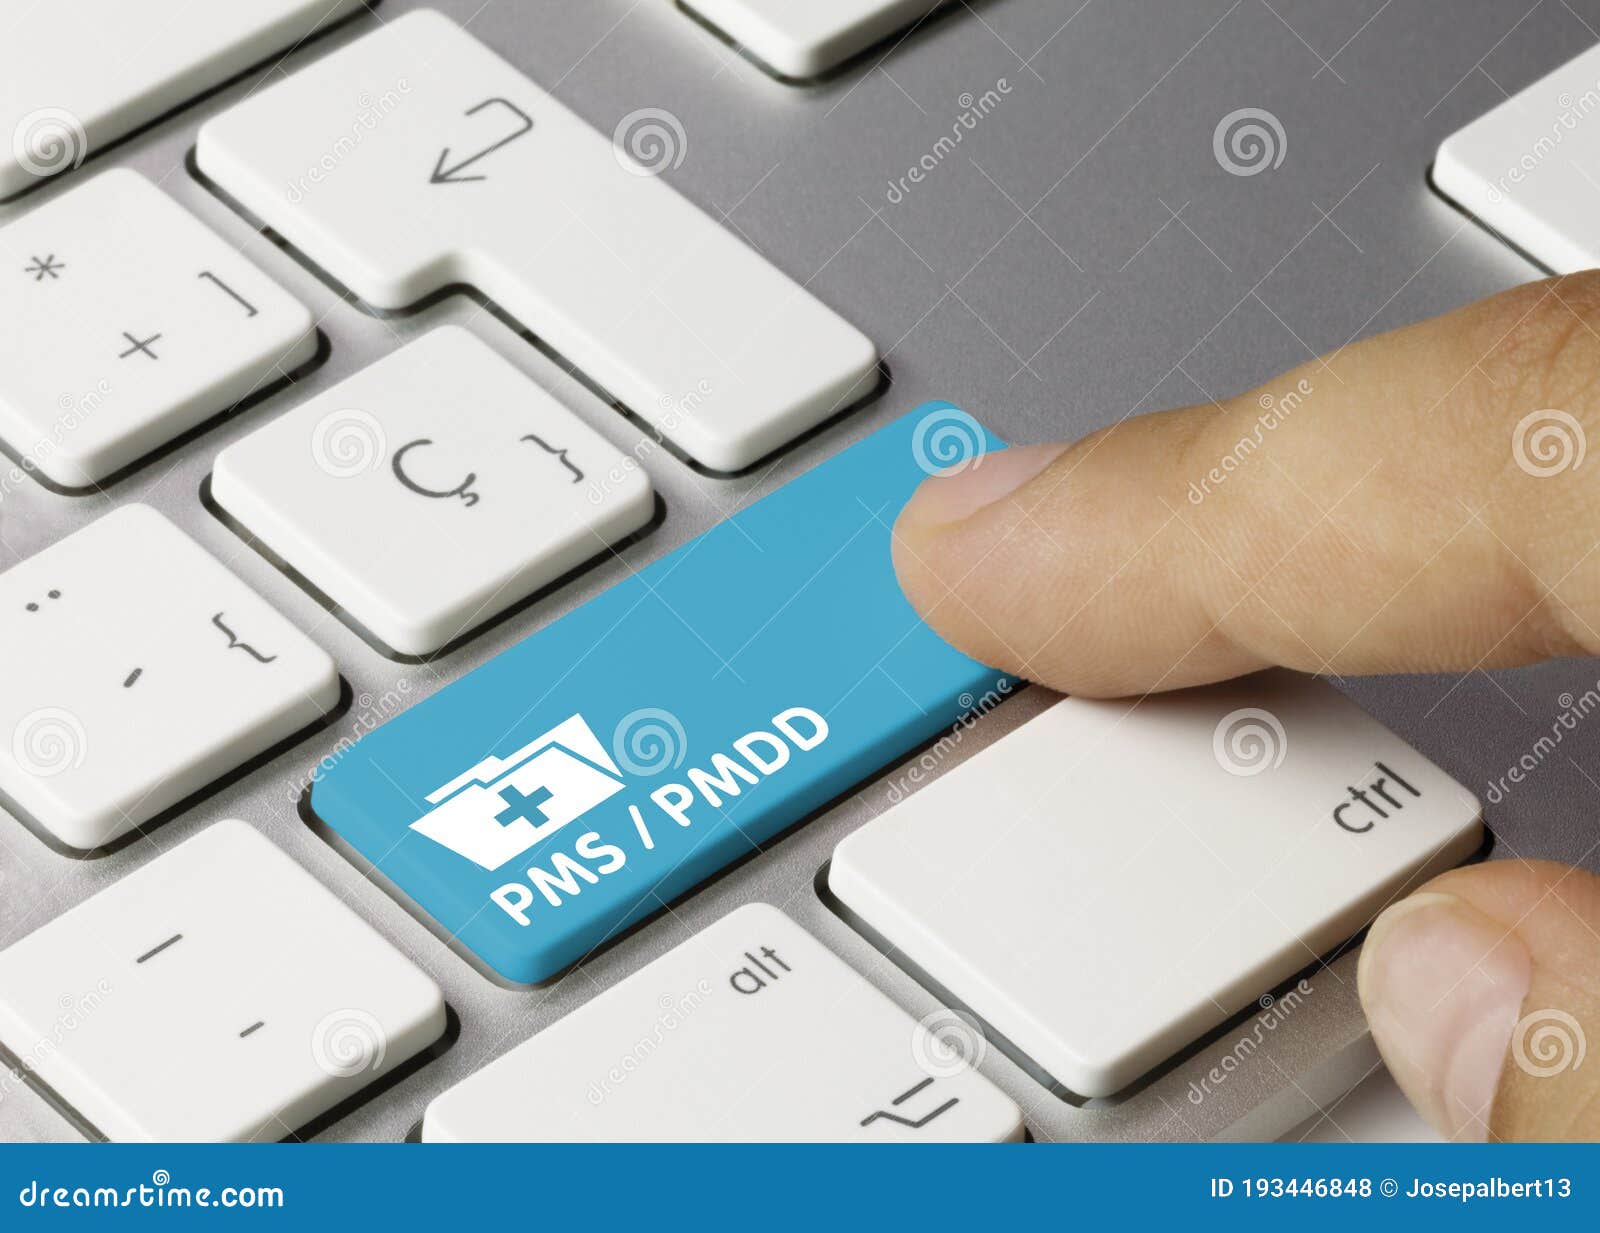 pms and pmdd - inscription on blue keyboard key